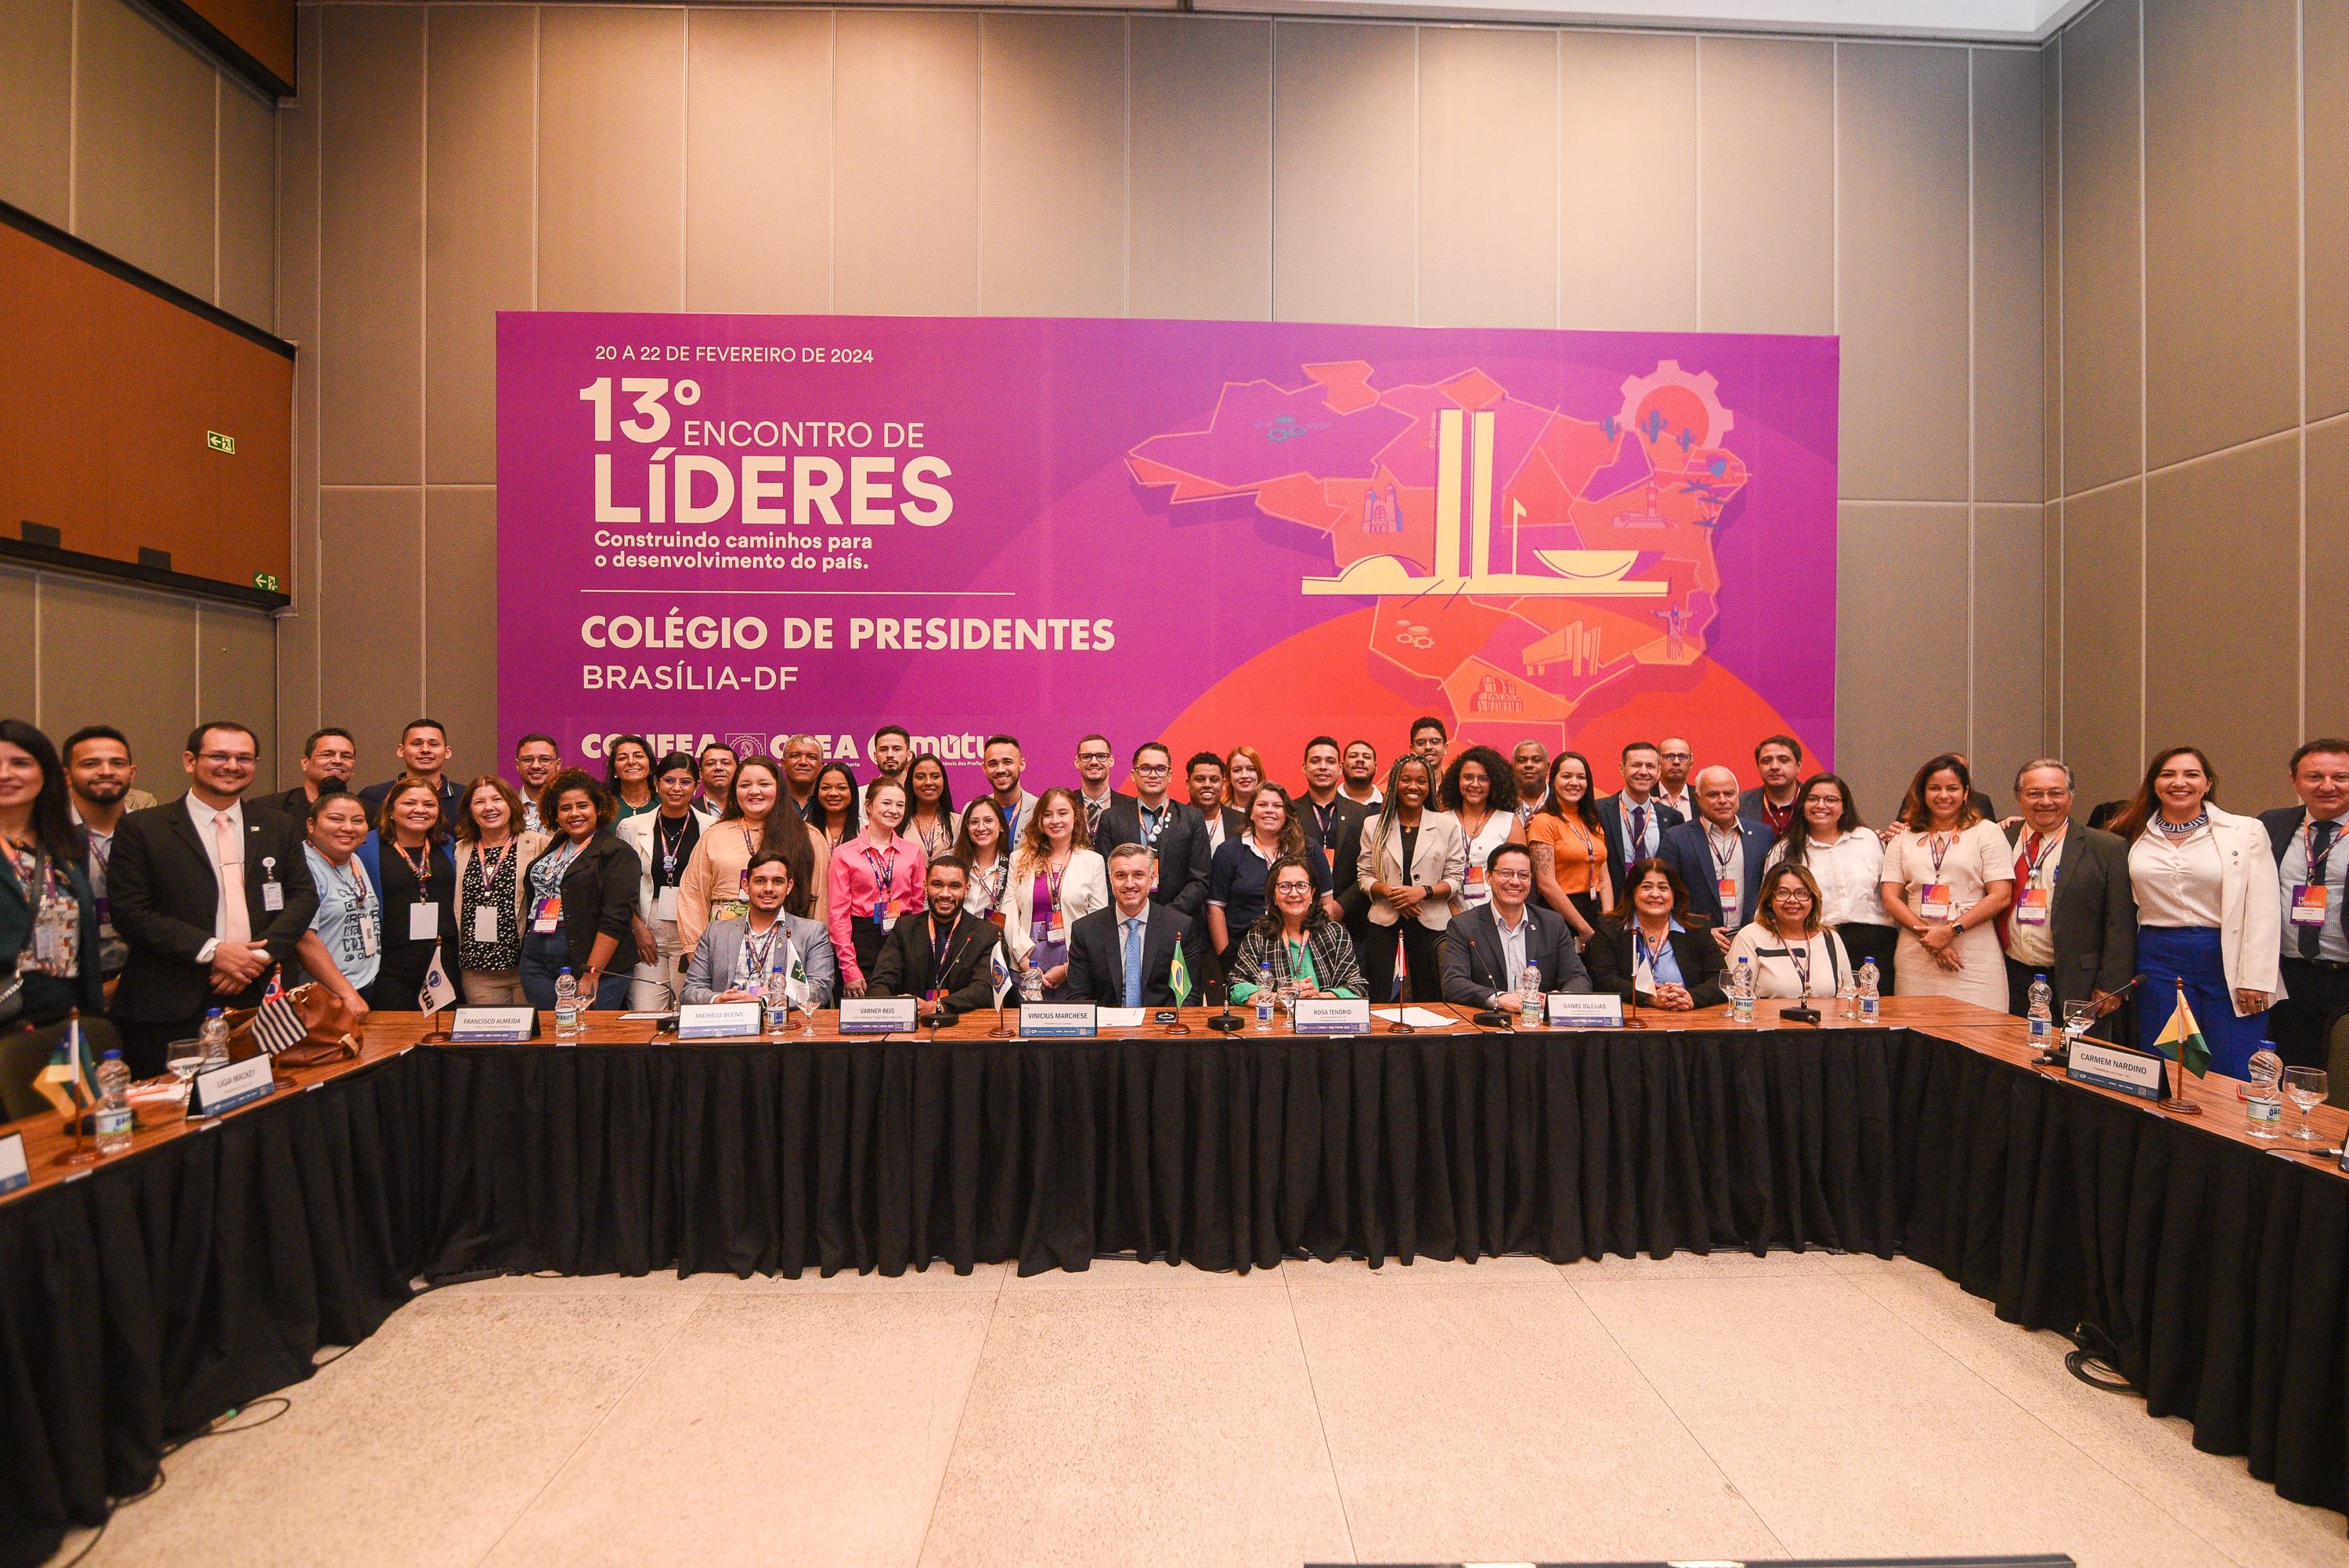 Participantes do Colégio de Presidentes (CP), conselheiros federais e convidados do Crea Júnior